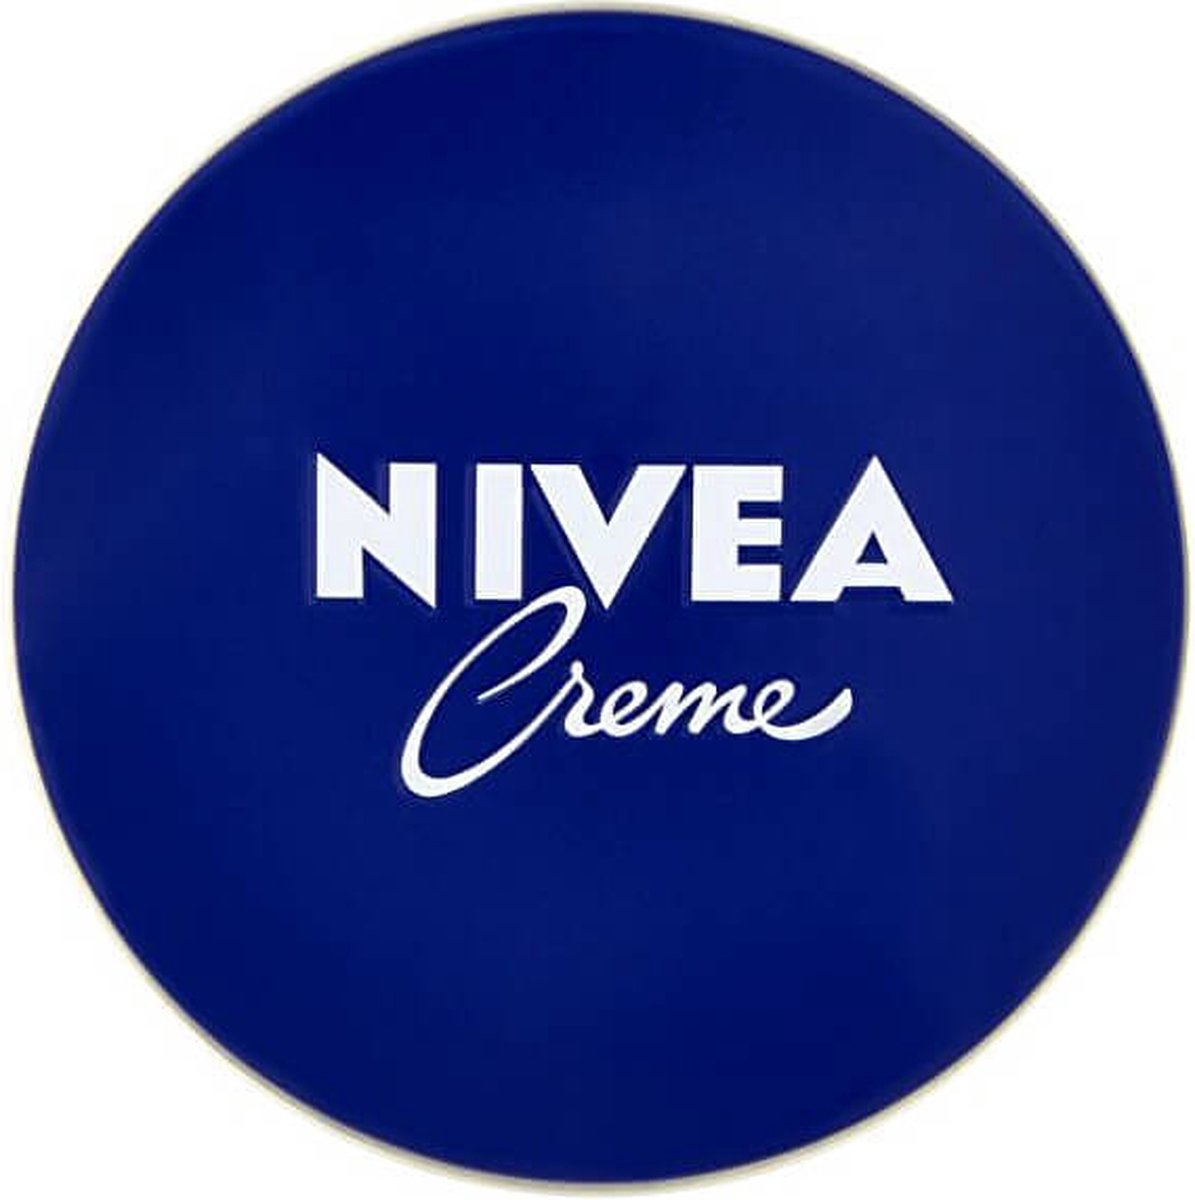 Nivea - Creme Intense Cream - 30ml